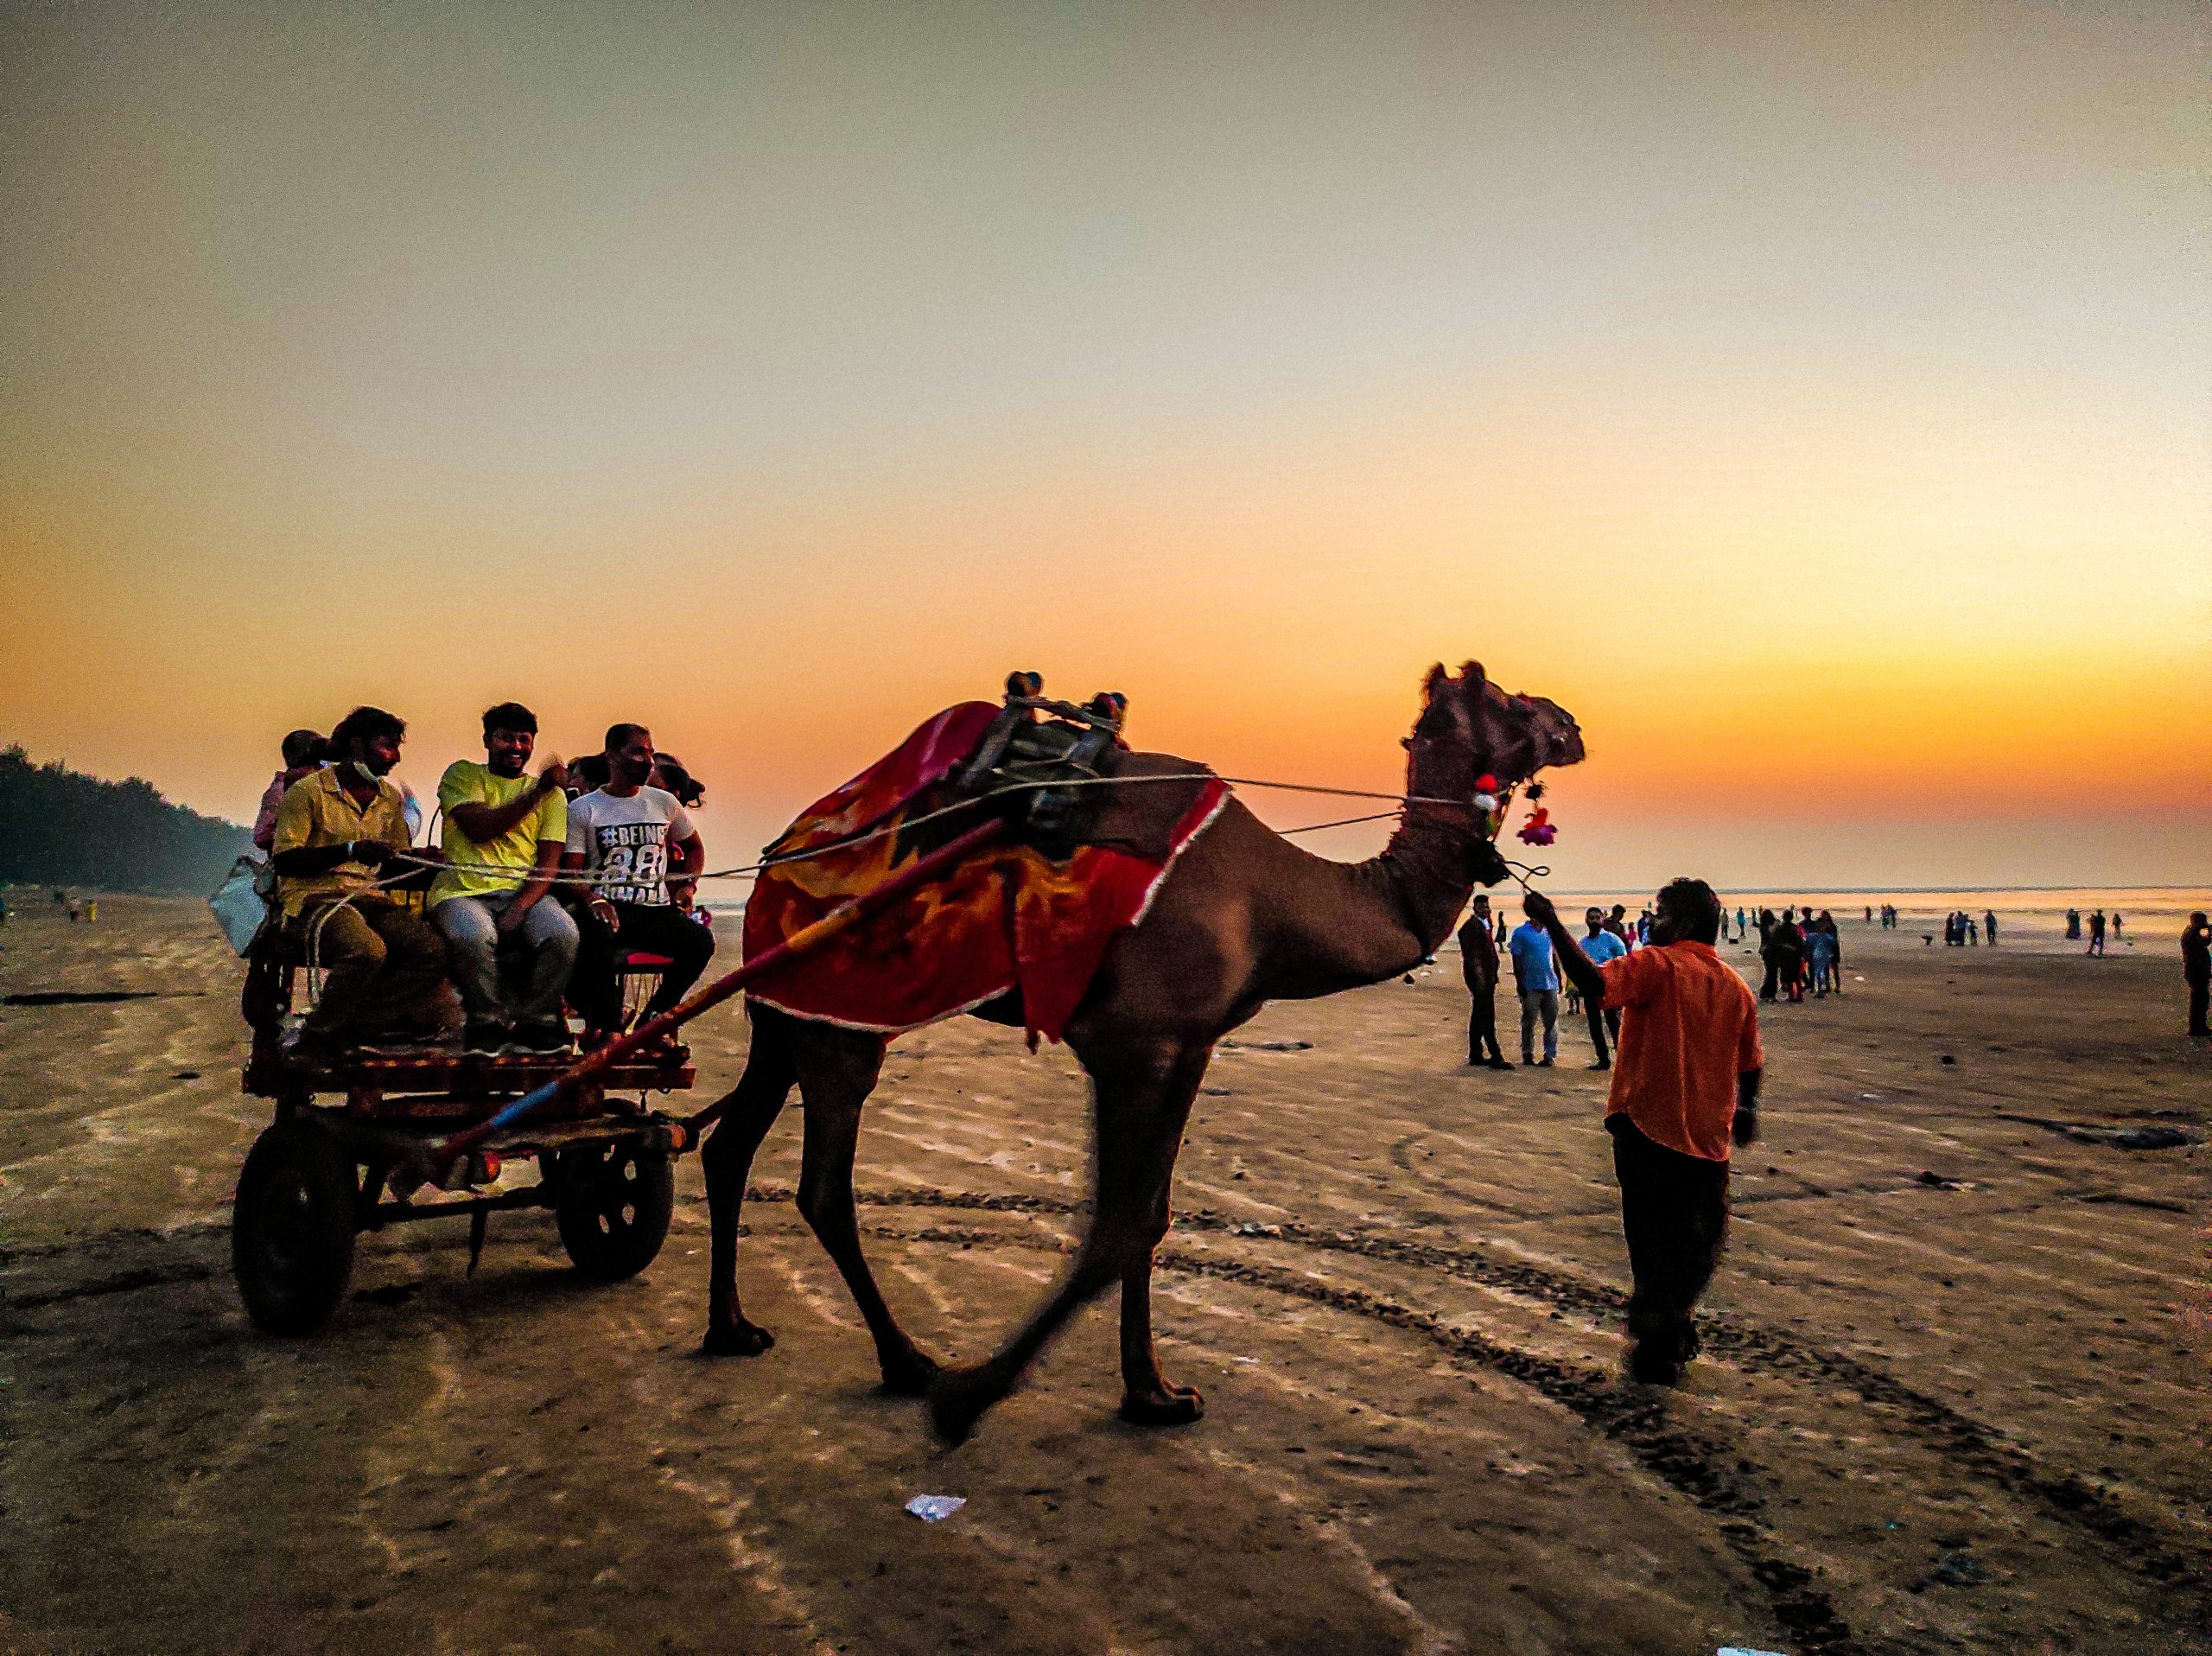 Camel cart ride on a beach